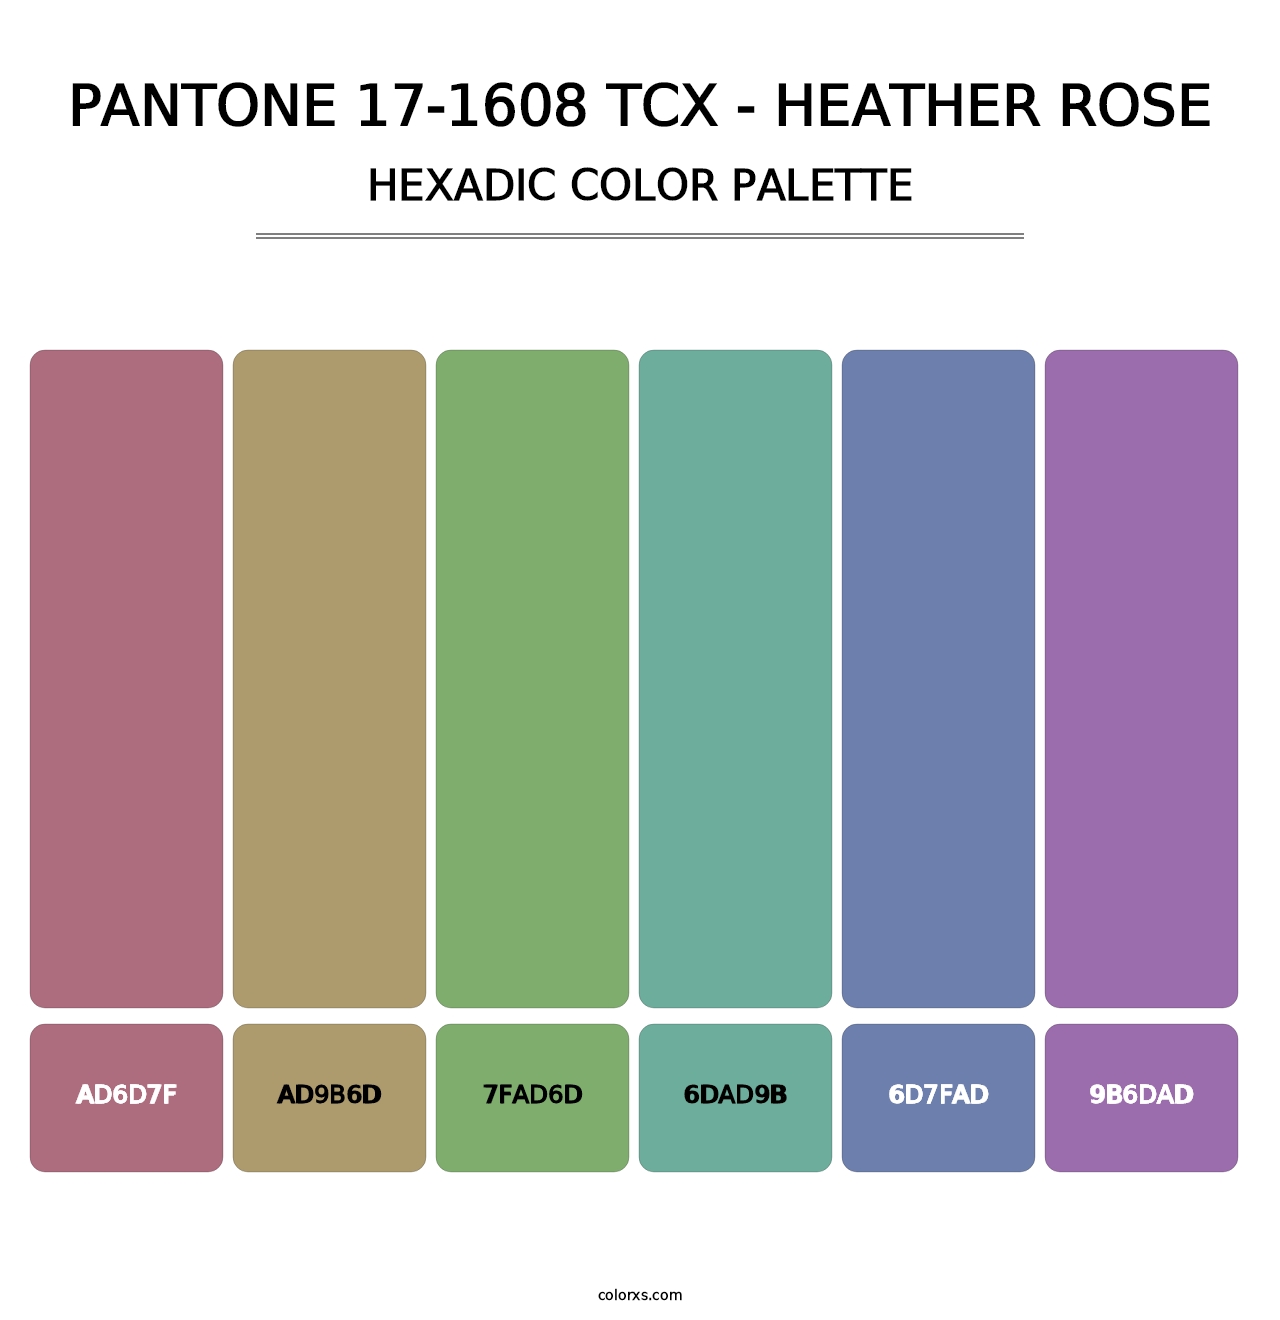 PANTONE 17-1608 TCX - Heather Rose - Hexadic Color Palette